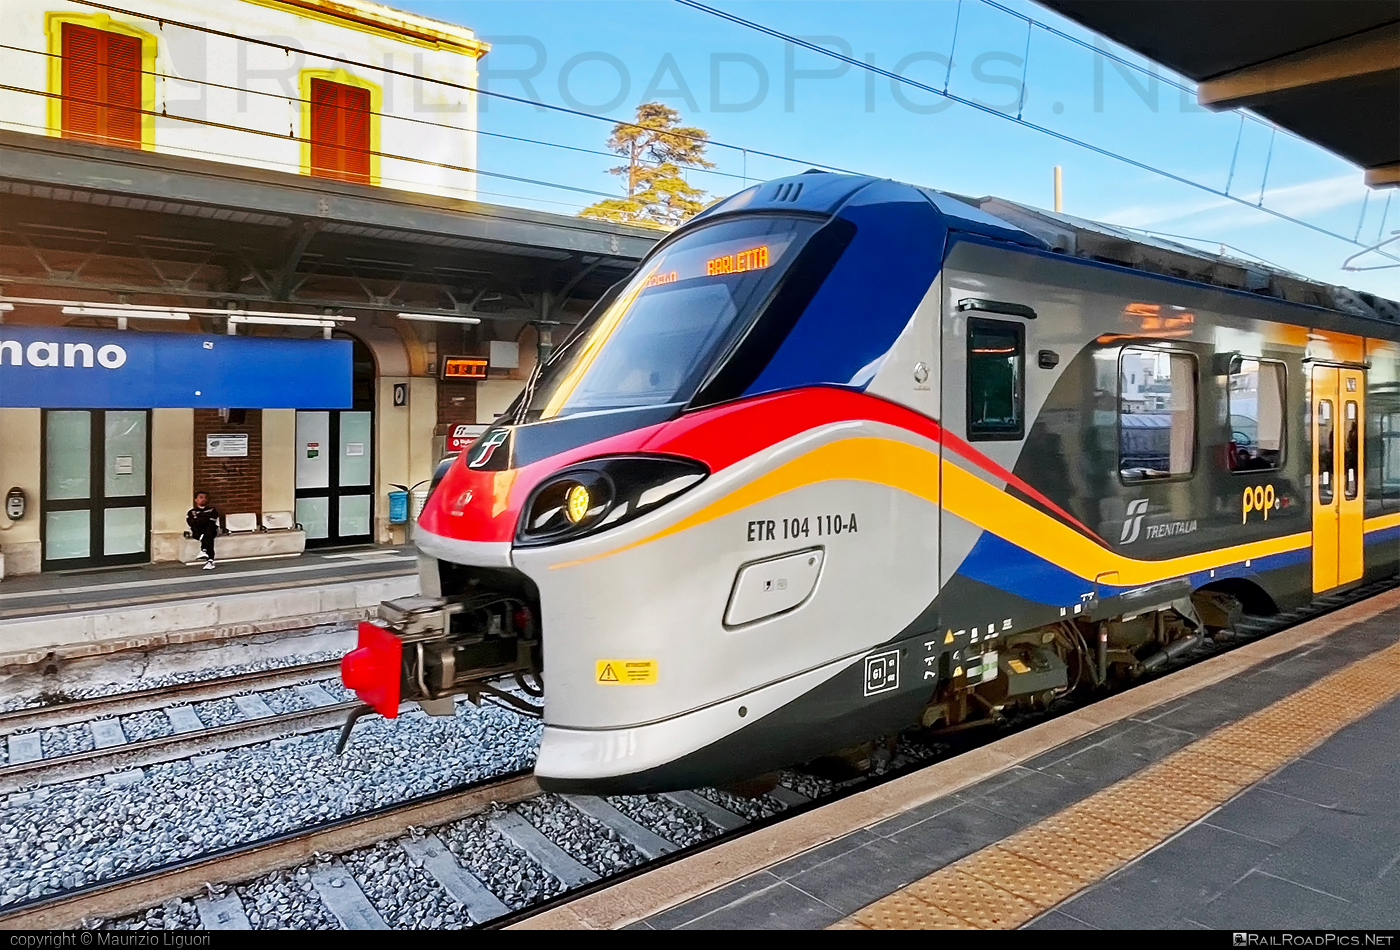 Alstom Coradia Stream ”Pop” - ETR 104 110-A operated by Trenitalia S.p.A. #alstom #alstomCoradia #coradia #coradiaStream #coradiaStreamPop #ferroviedellostato #fs #fsitaliane #pop #trenitalia #trenitaliaspa